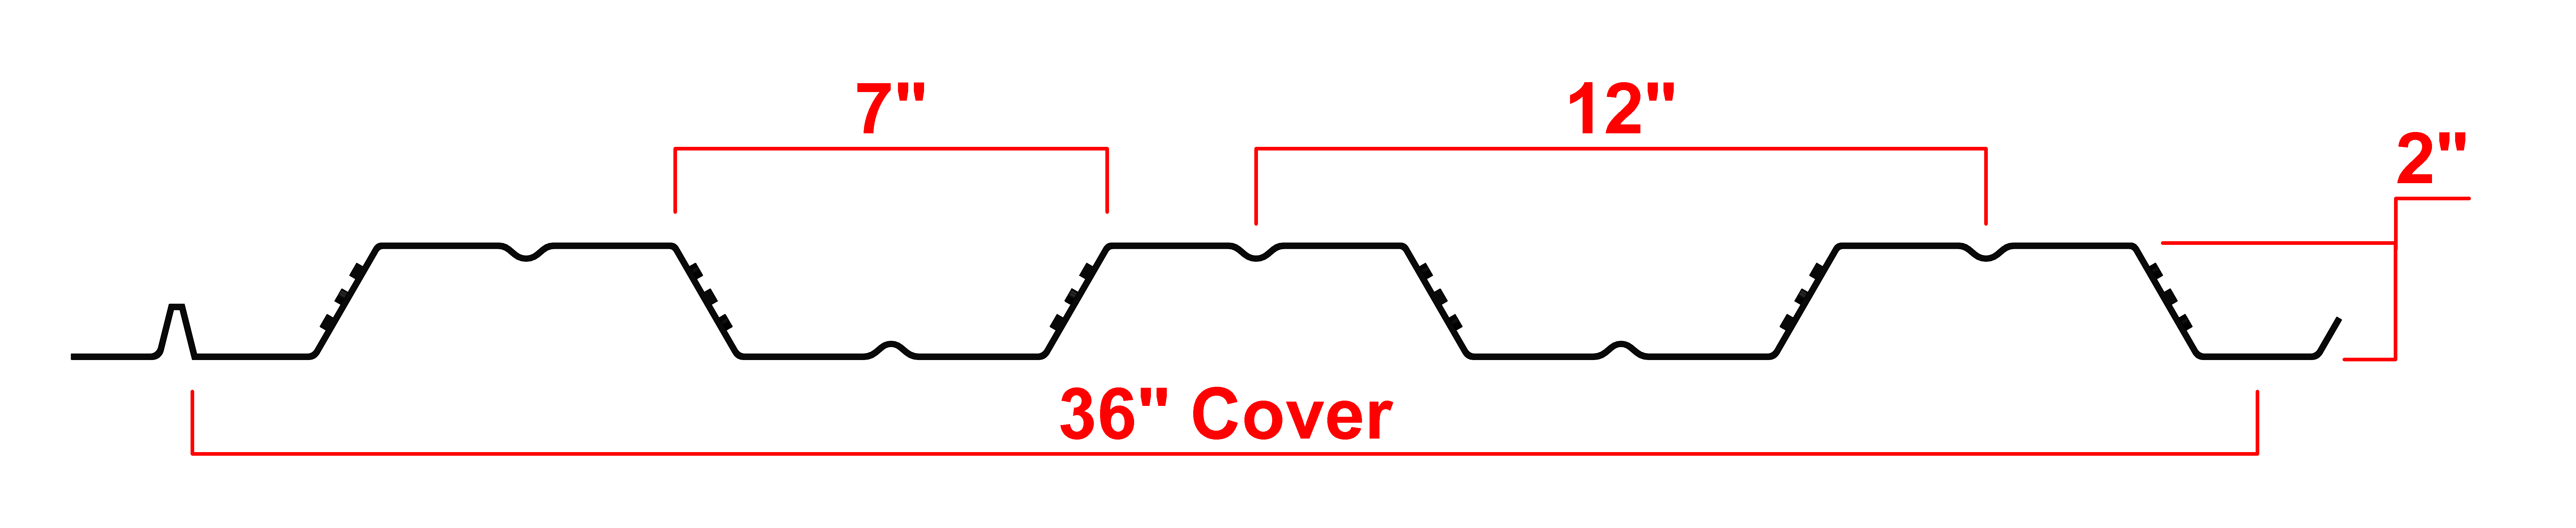 2.0 or 2VLI Composite Deck Profile